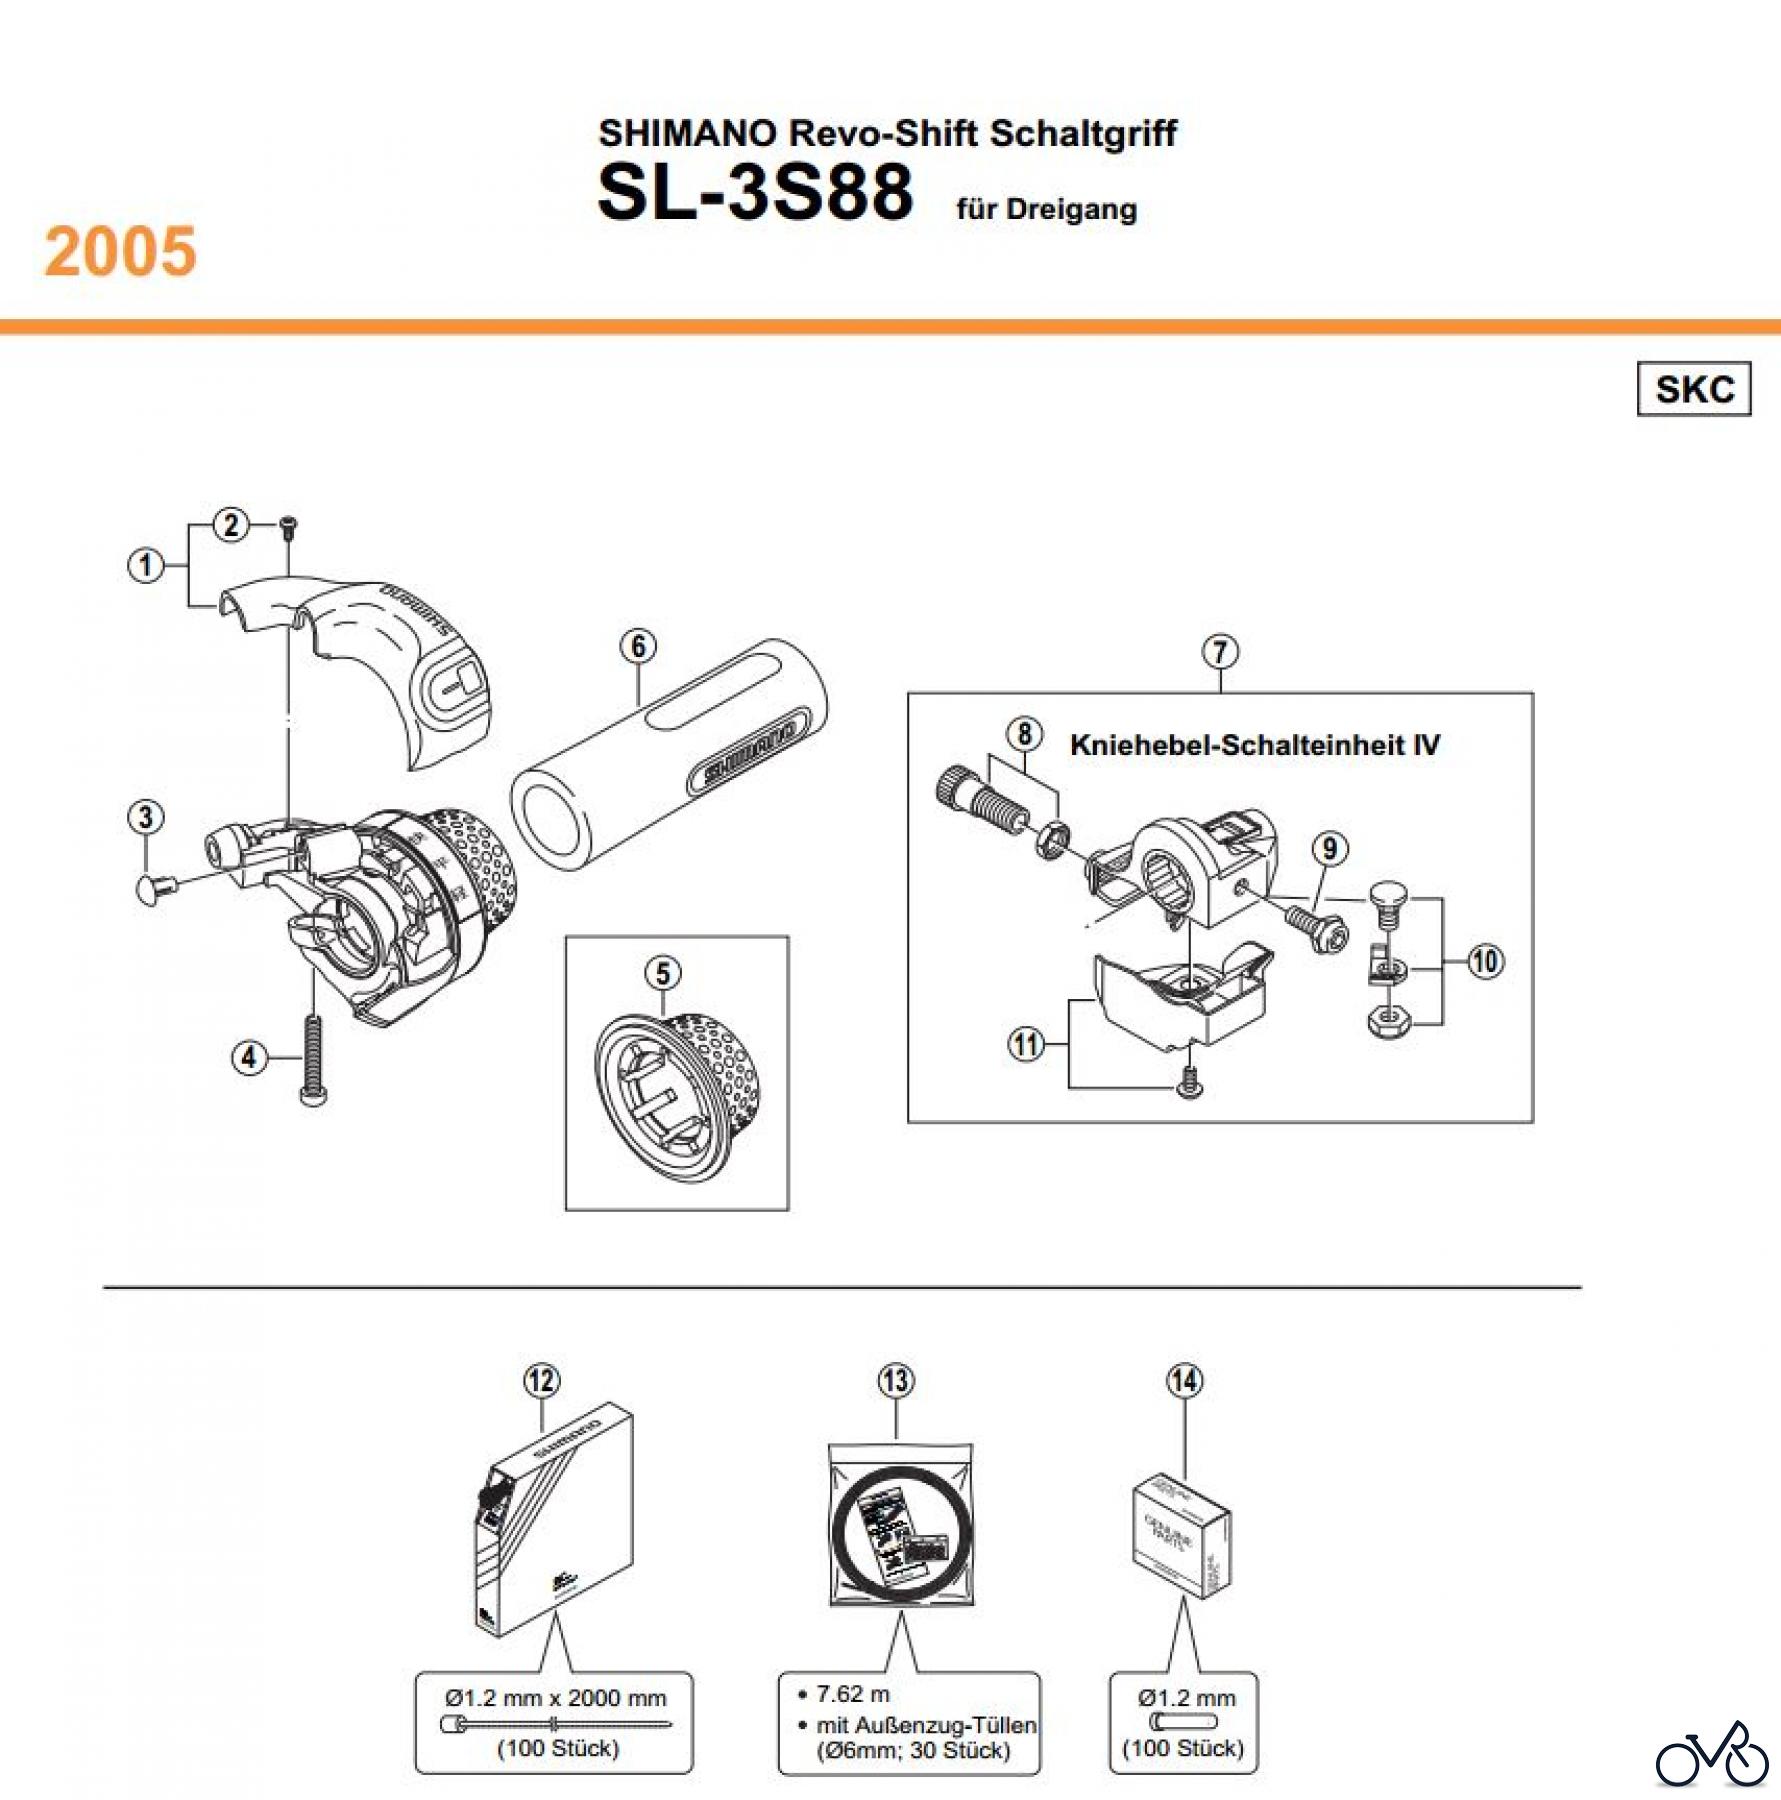  Shimano SL Shift Lever - Schalthebel SL-3S88, 2005 SHIMANO Revo-Shift Schaltgriff